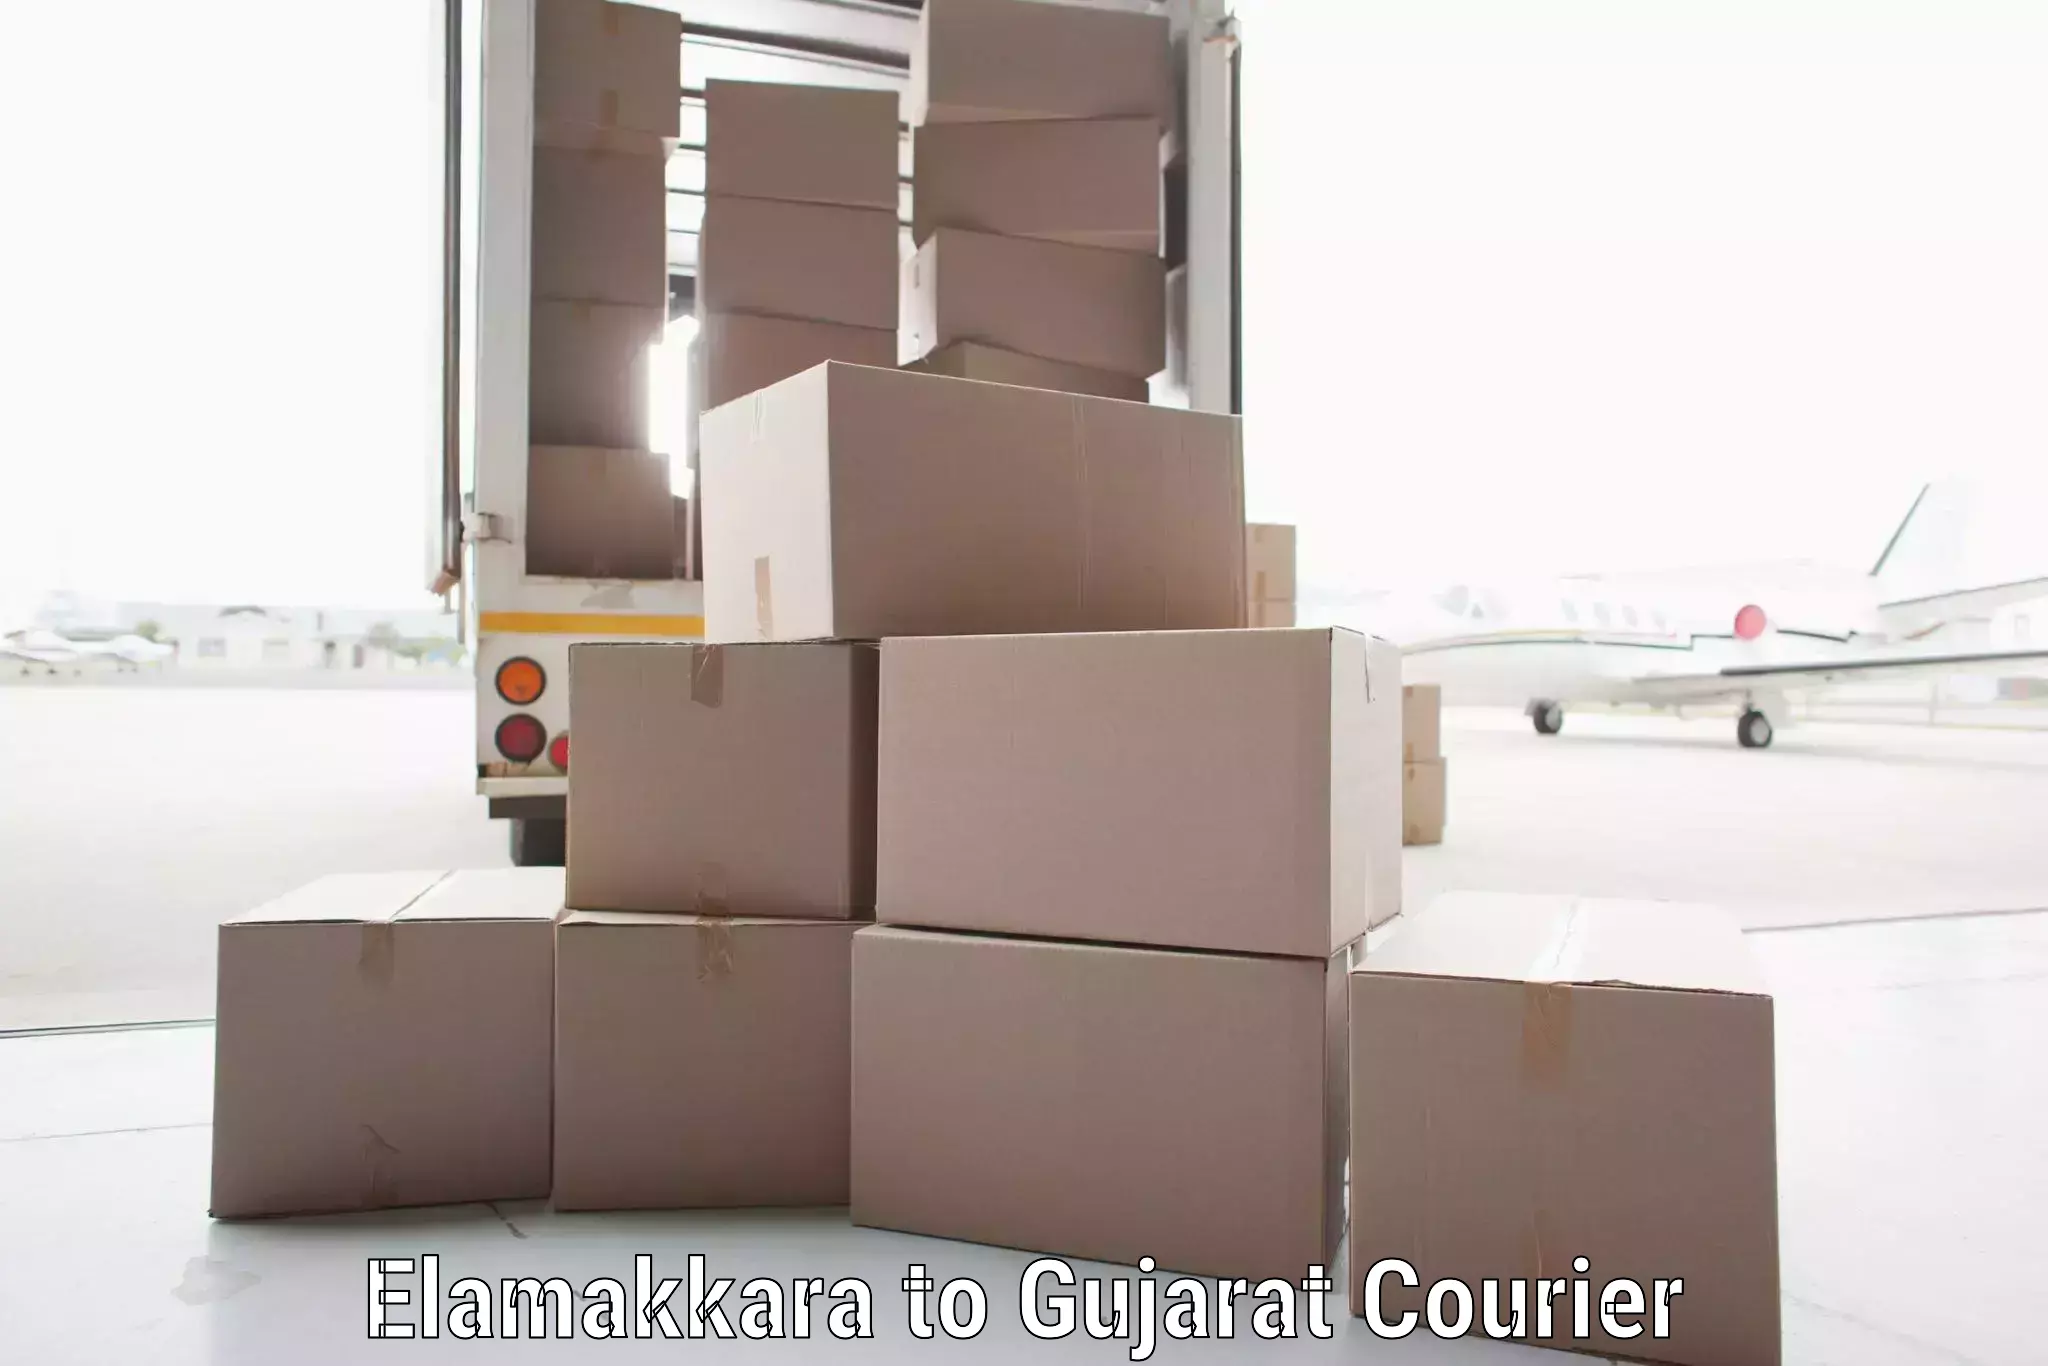 Courier service comparison Elamakkara to Junagadh